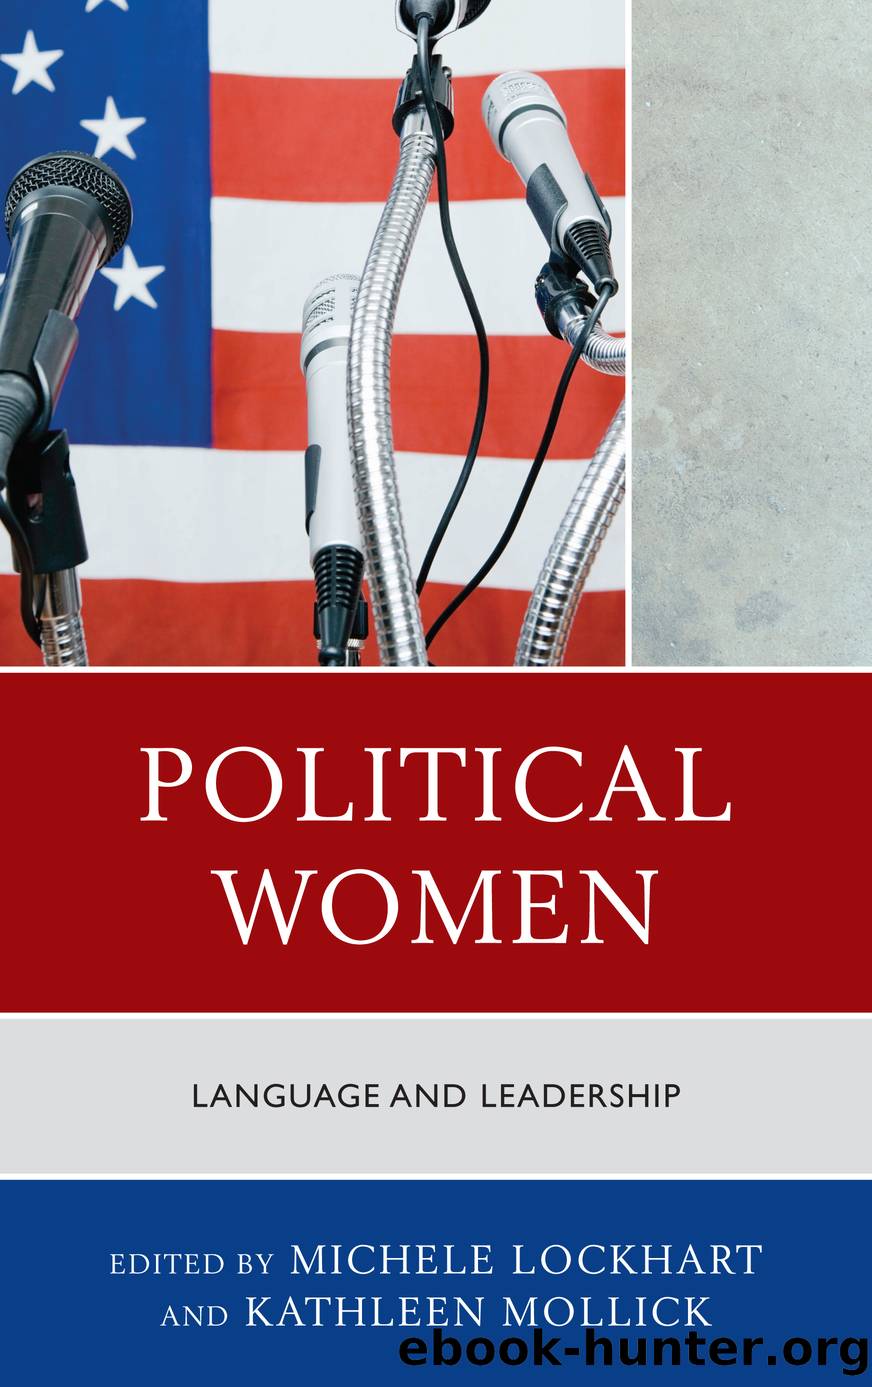 Political Women by Michele Lockhart